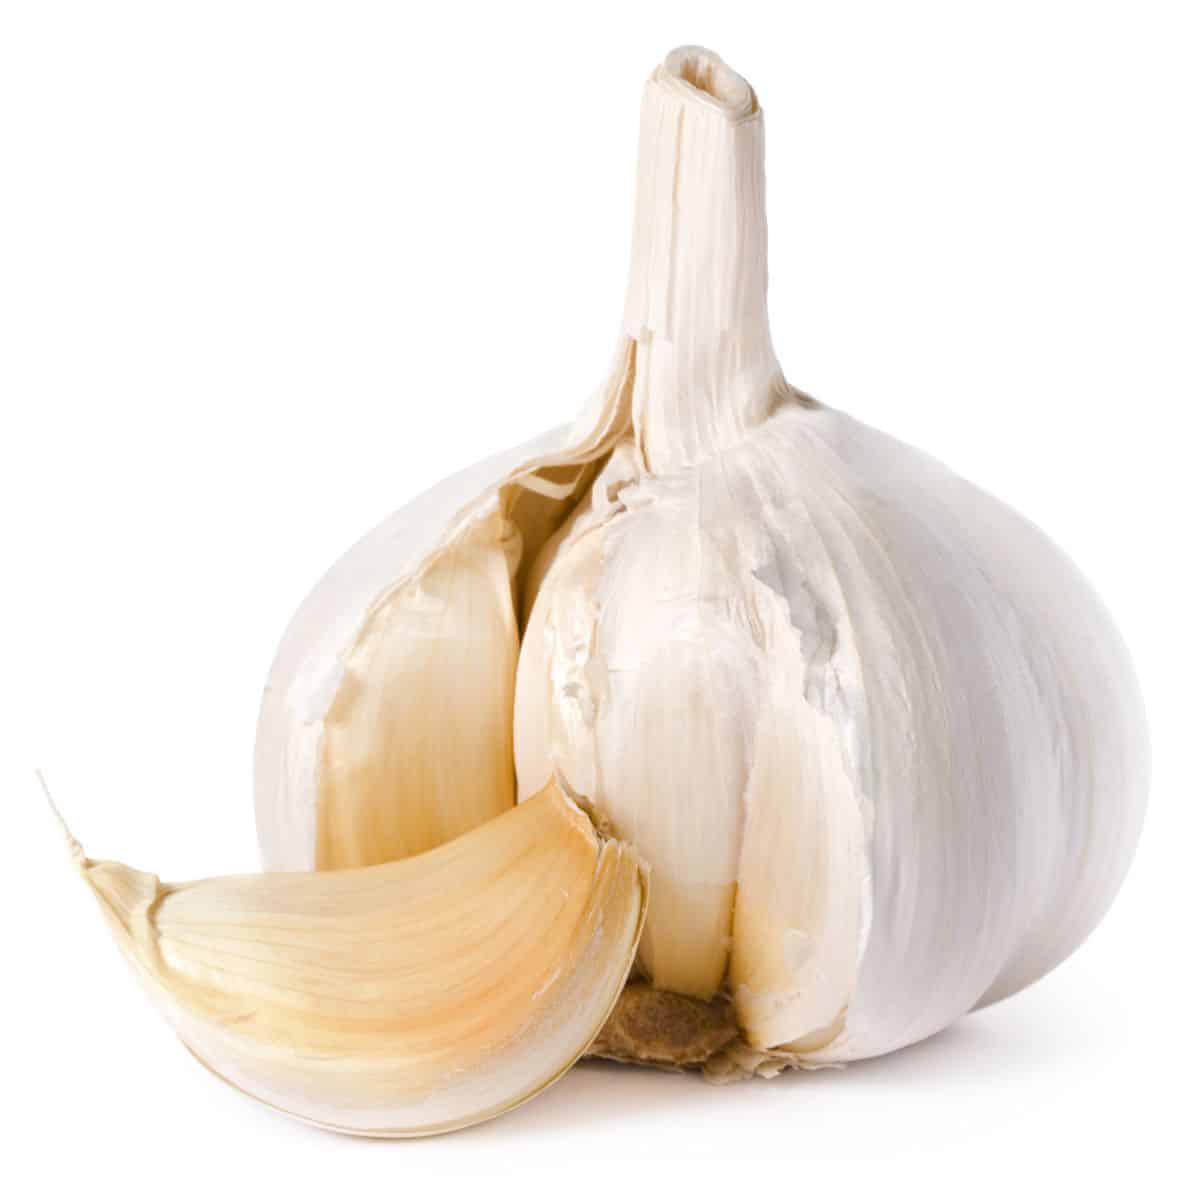 Carpathian garlic on an isolated white background.